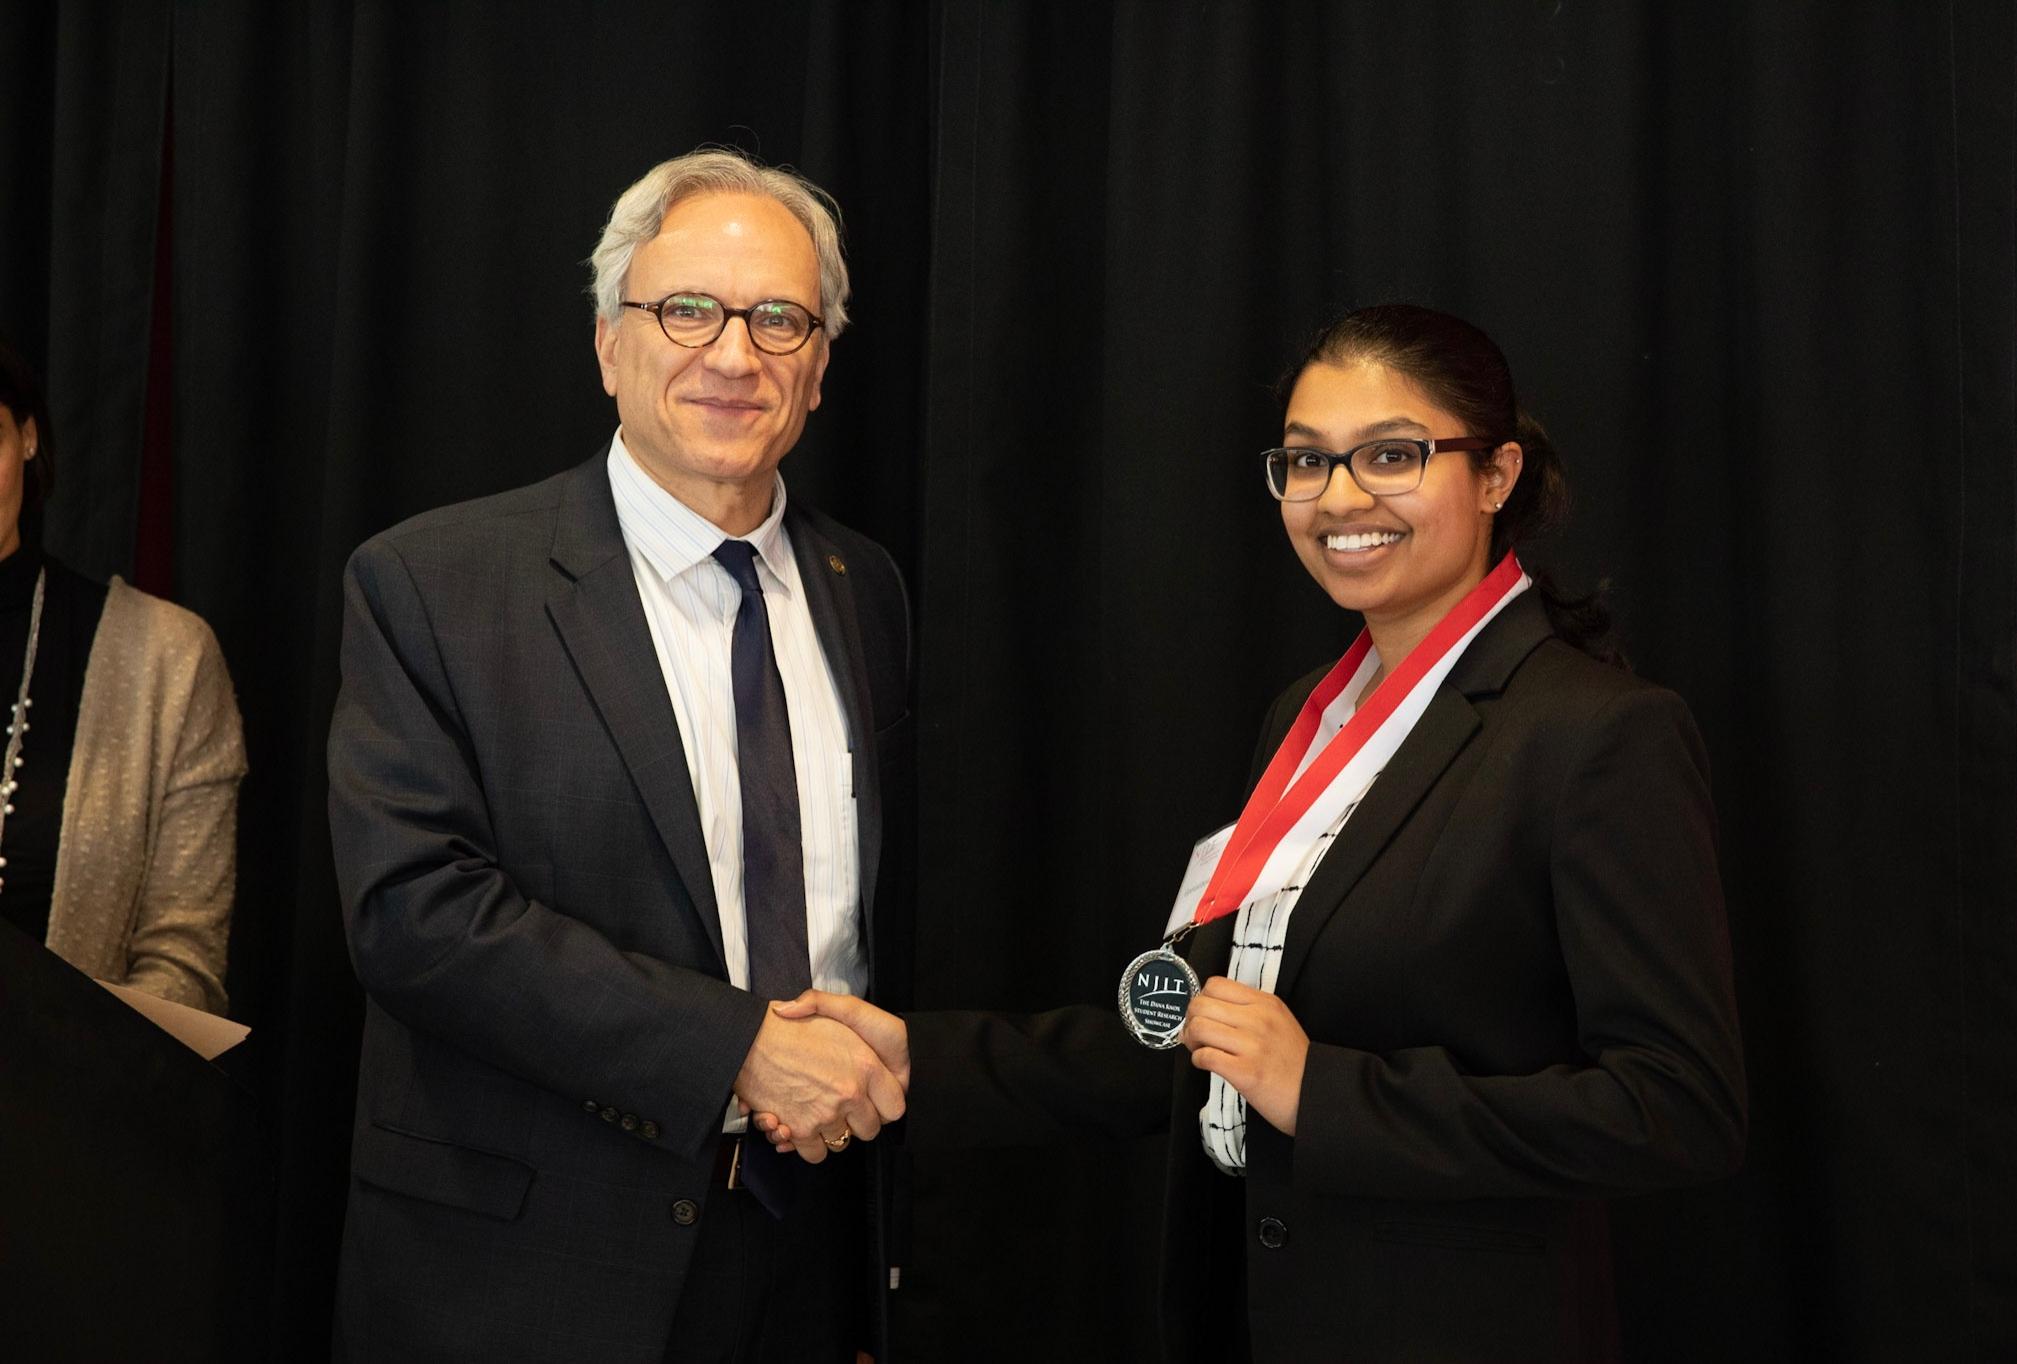 Biology sophomore and student at Albert Dorman Honors College, Geetasravya Vegunta, collects her award alongside NJIT Provost Fadi P. Deek.